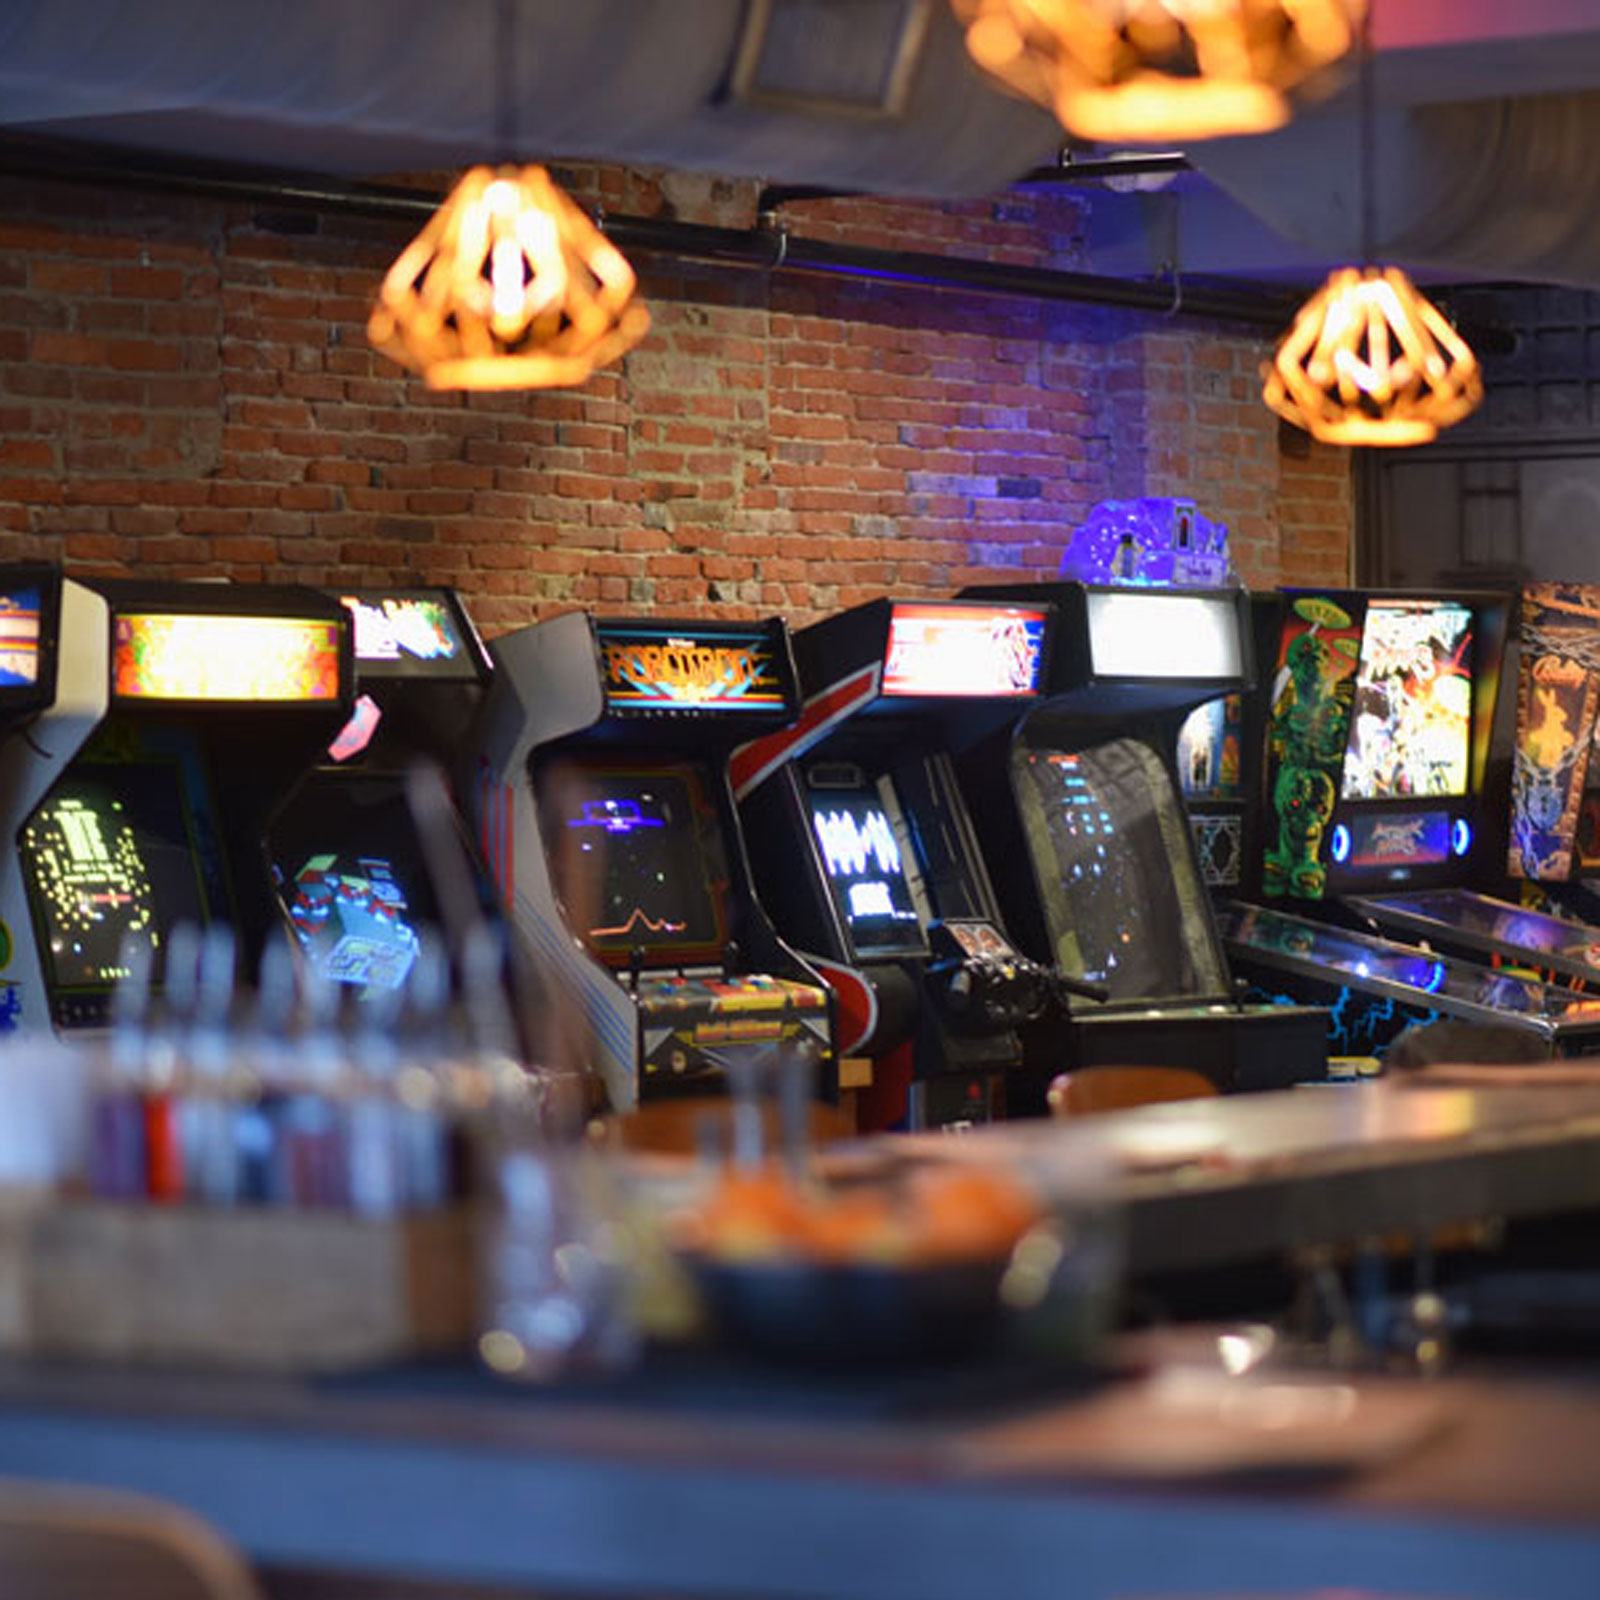 Video game machines line a wall at an arcade bar in Burlington, Vermont.